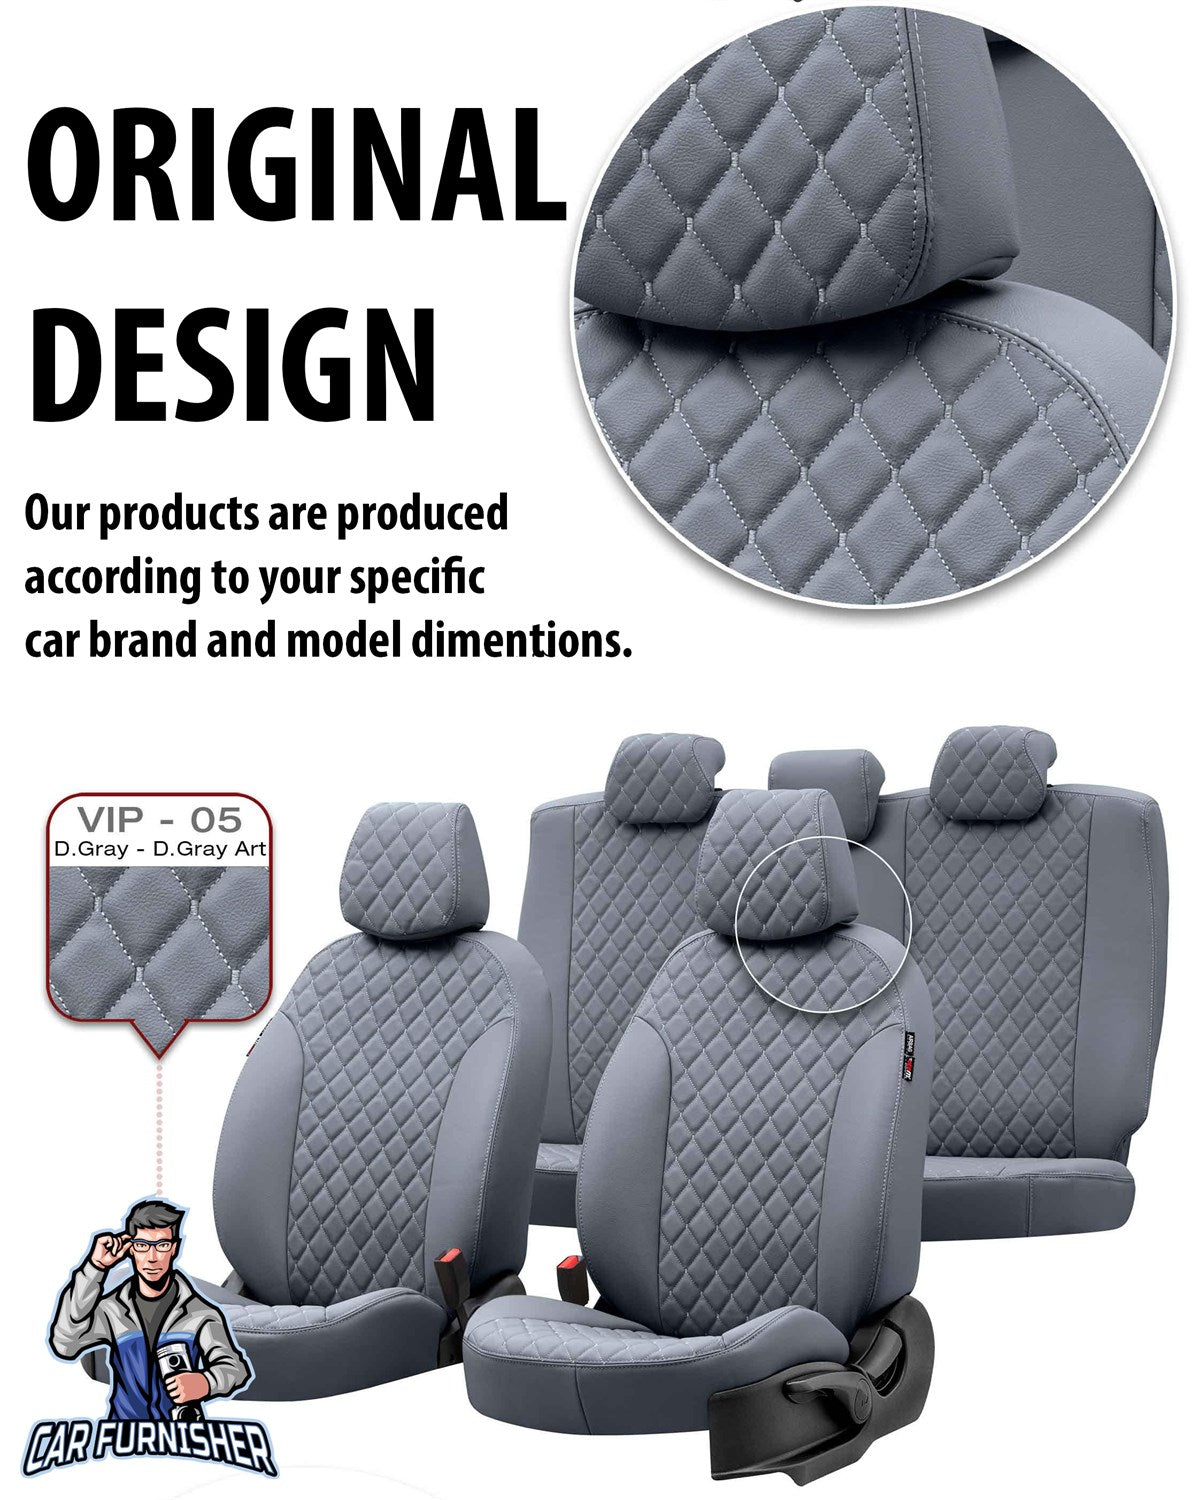 Honda Jazz Seat Covers Madrid Leather Design Smoked Leather